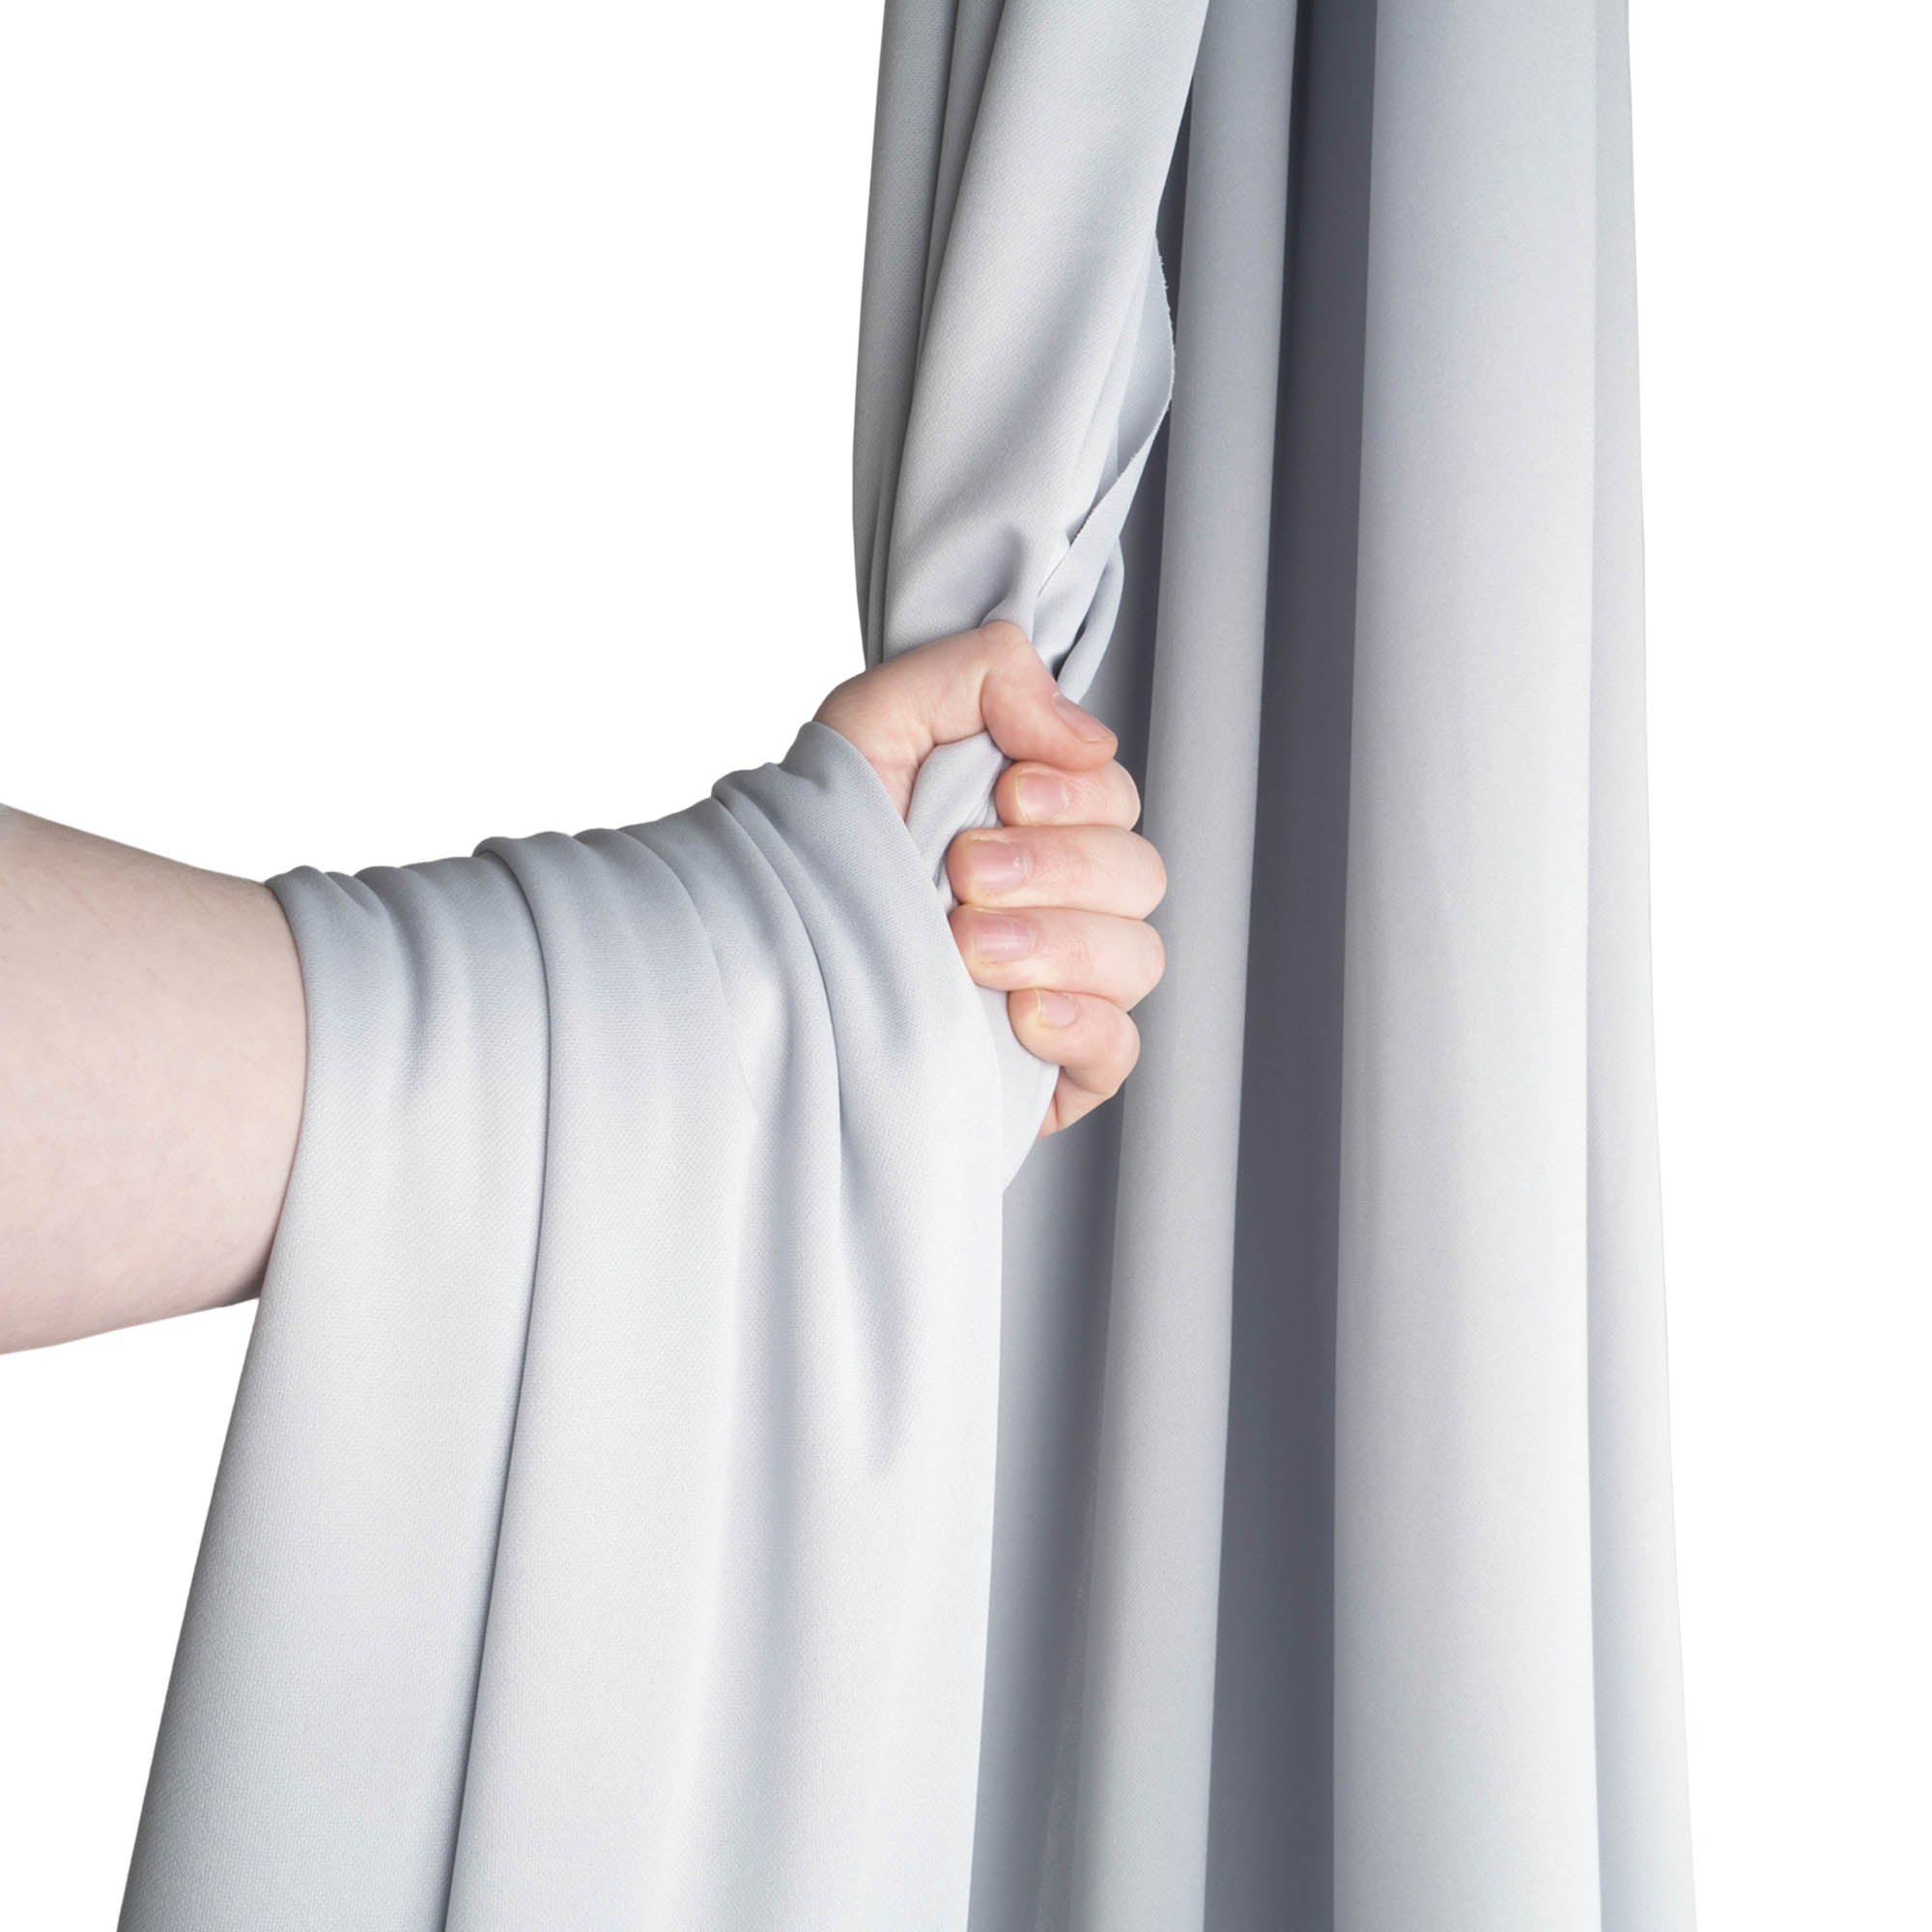 Dove Grey silk wrapped around hand